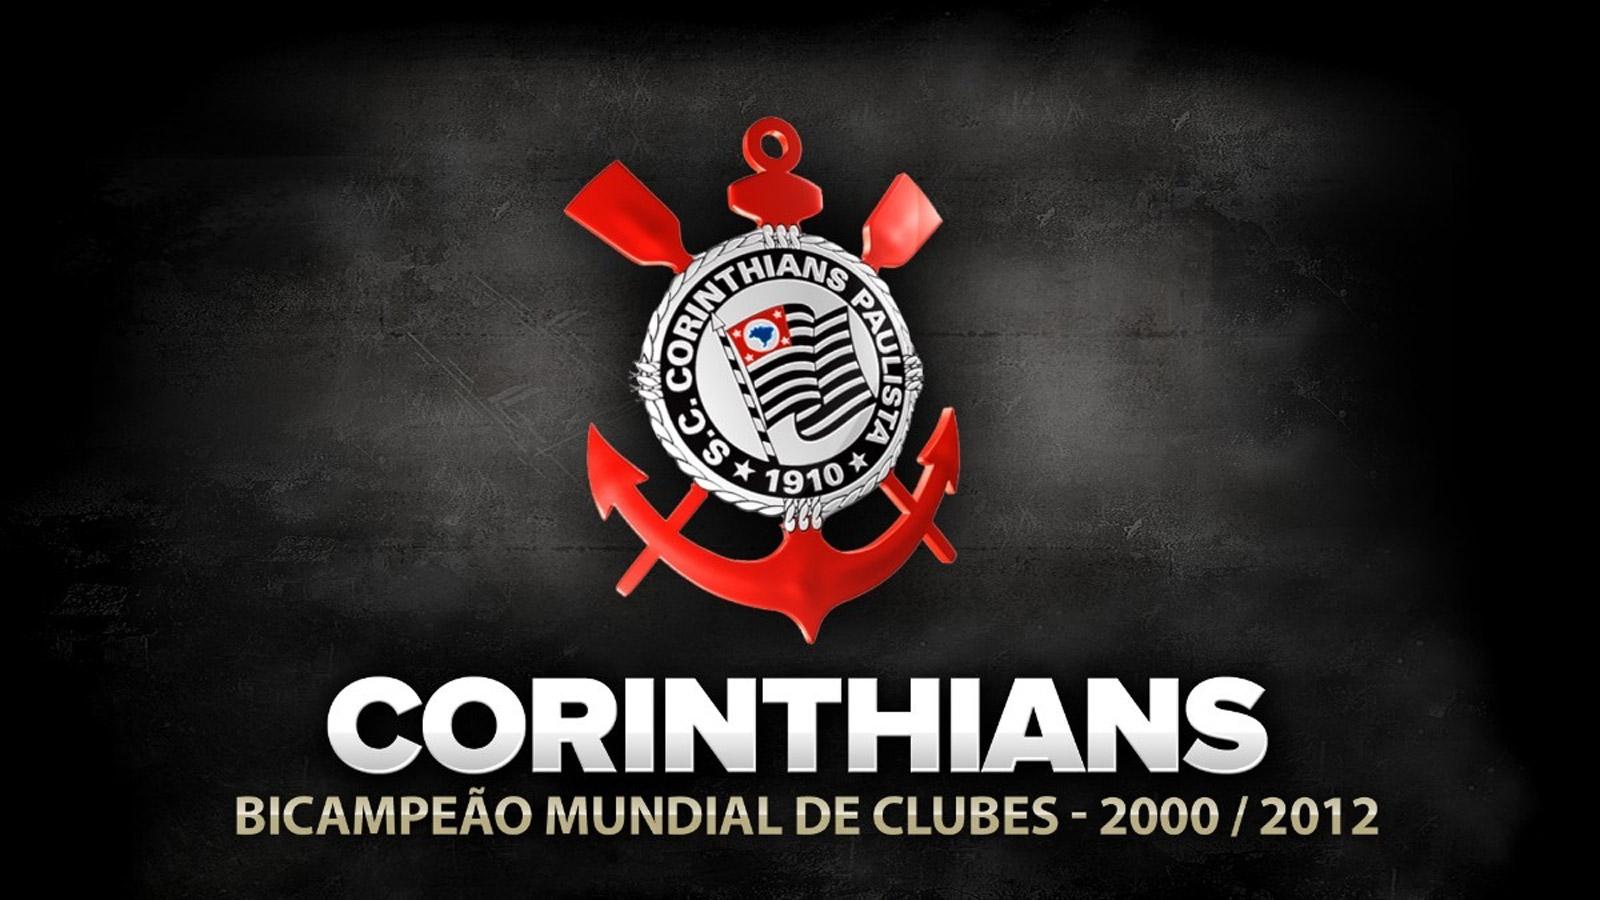 Wallpaper do Corinthians: Corinthians bicampeão mundial 2000 - 2012